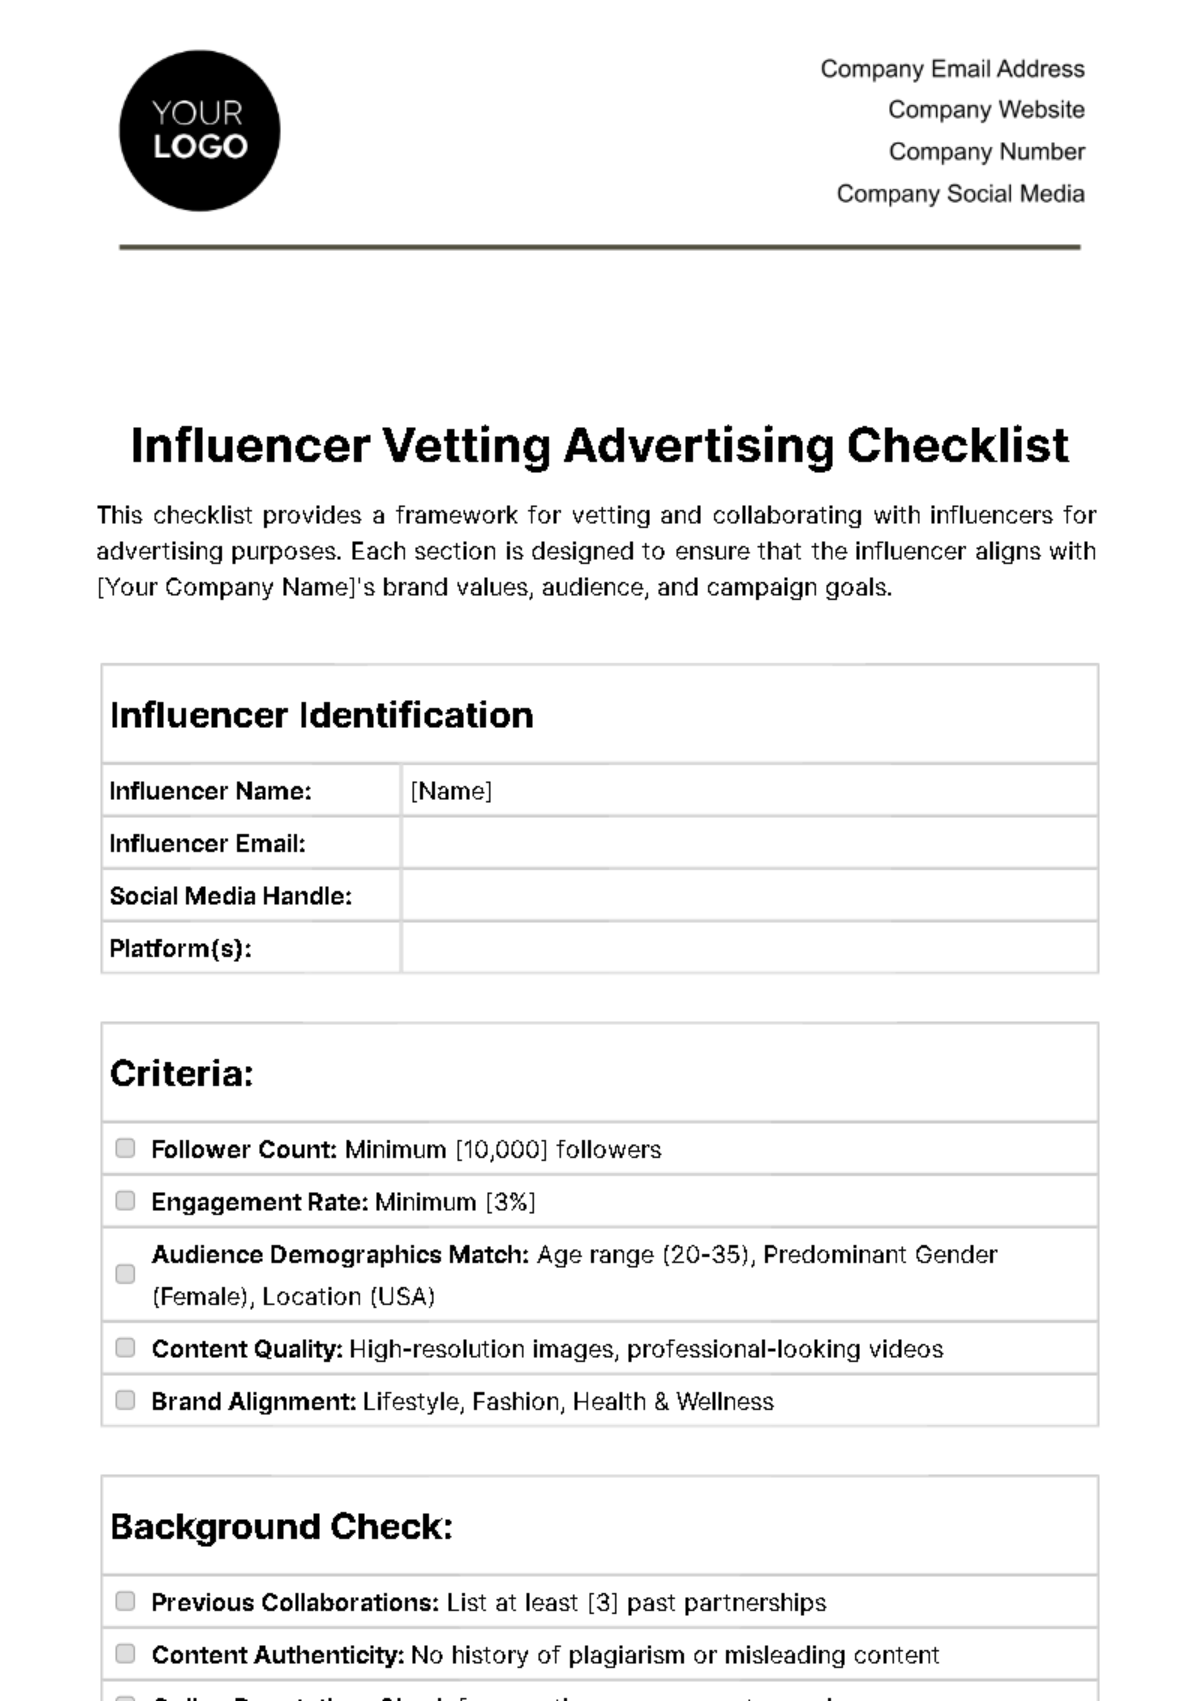 Influencer Vetting Advertising Checklist Template